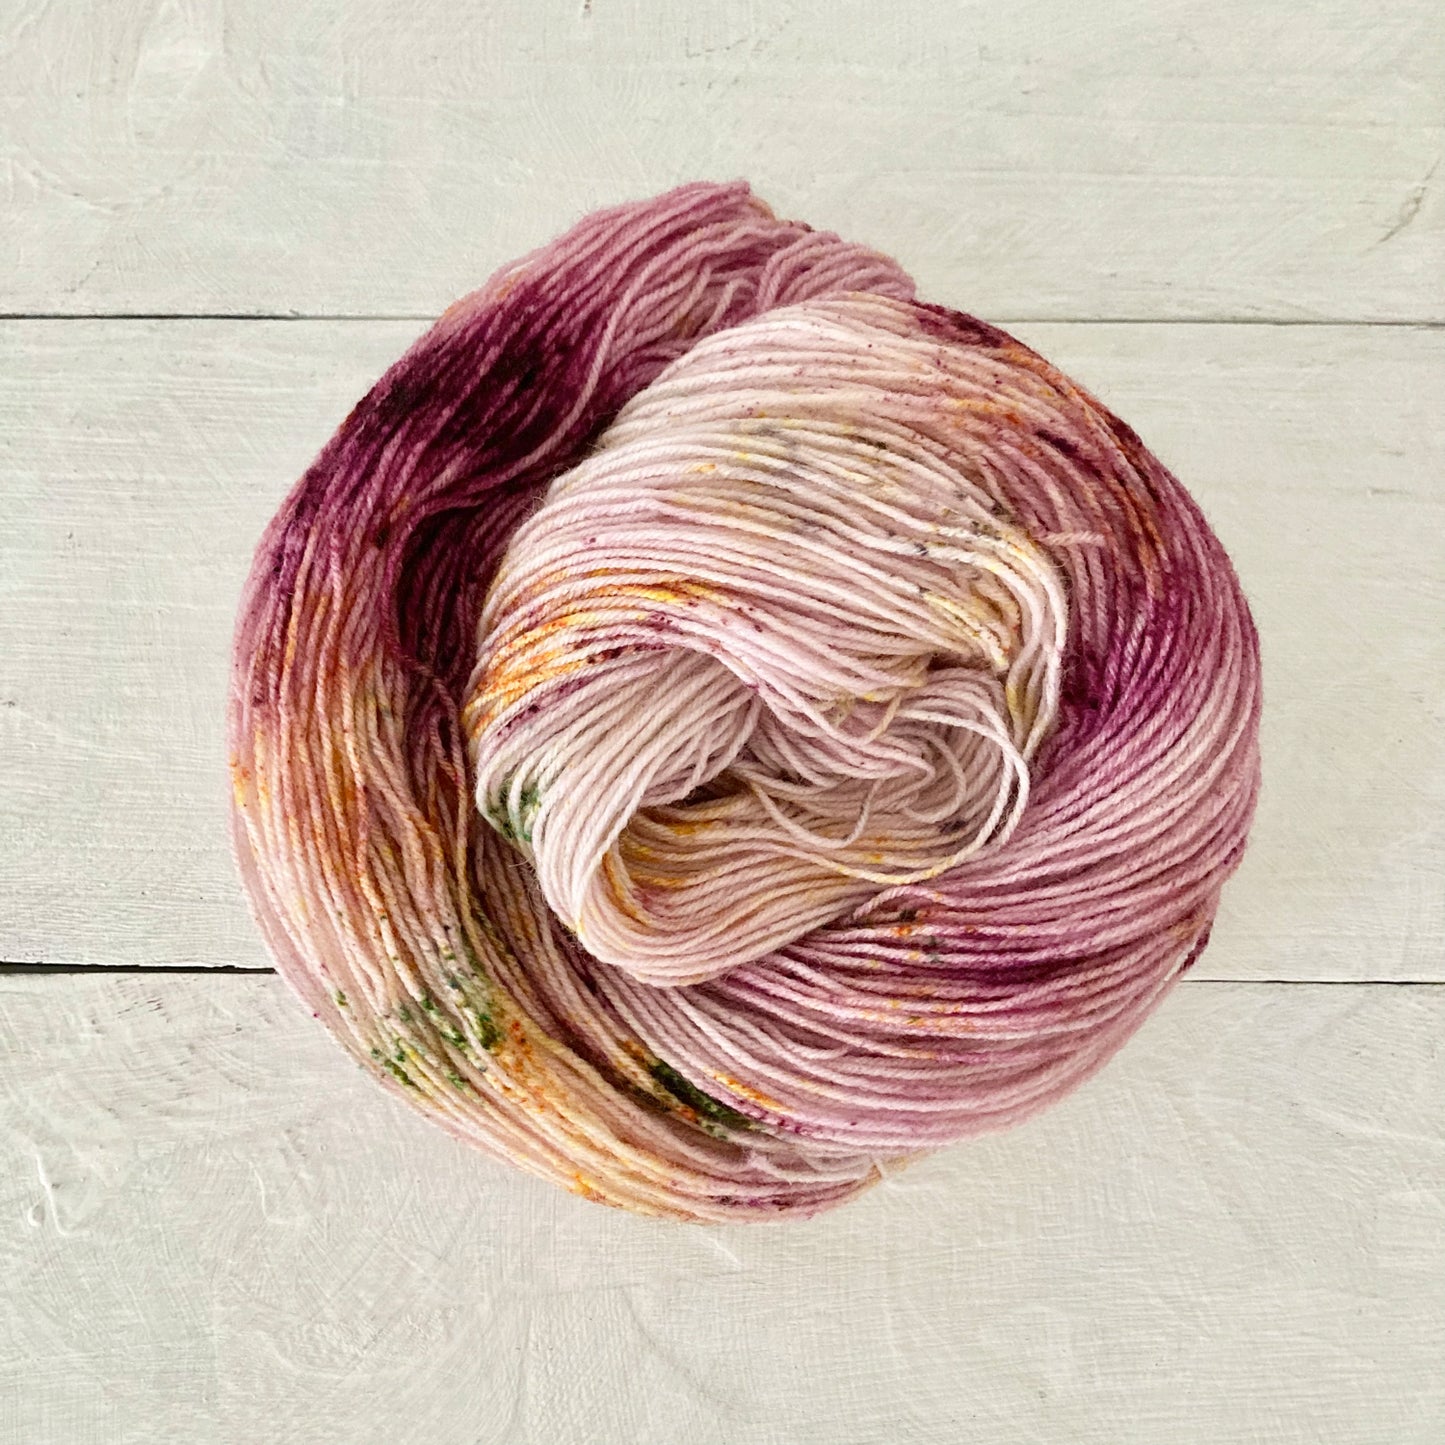 Hand-dyed yarn No.253 sock yarn "Rosamunde"